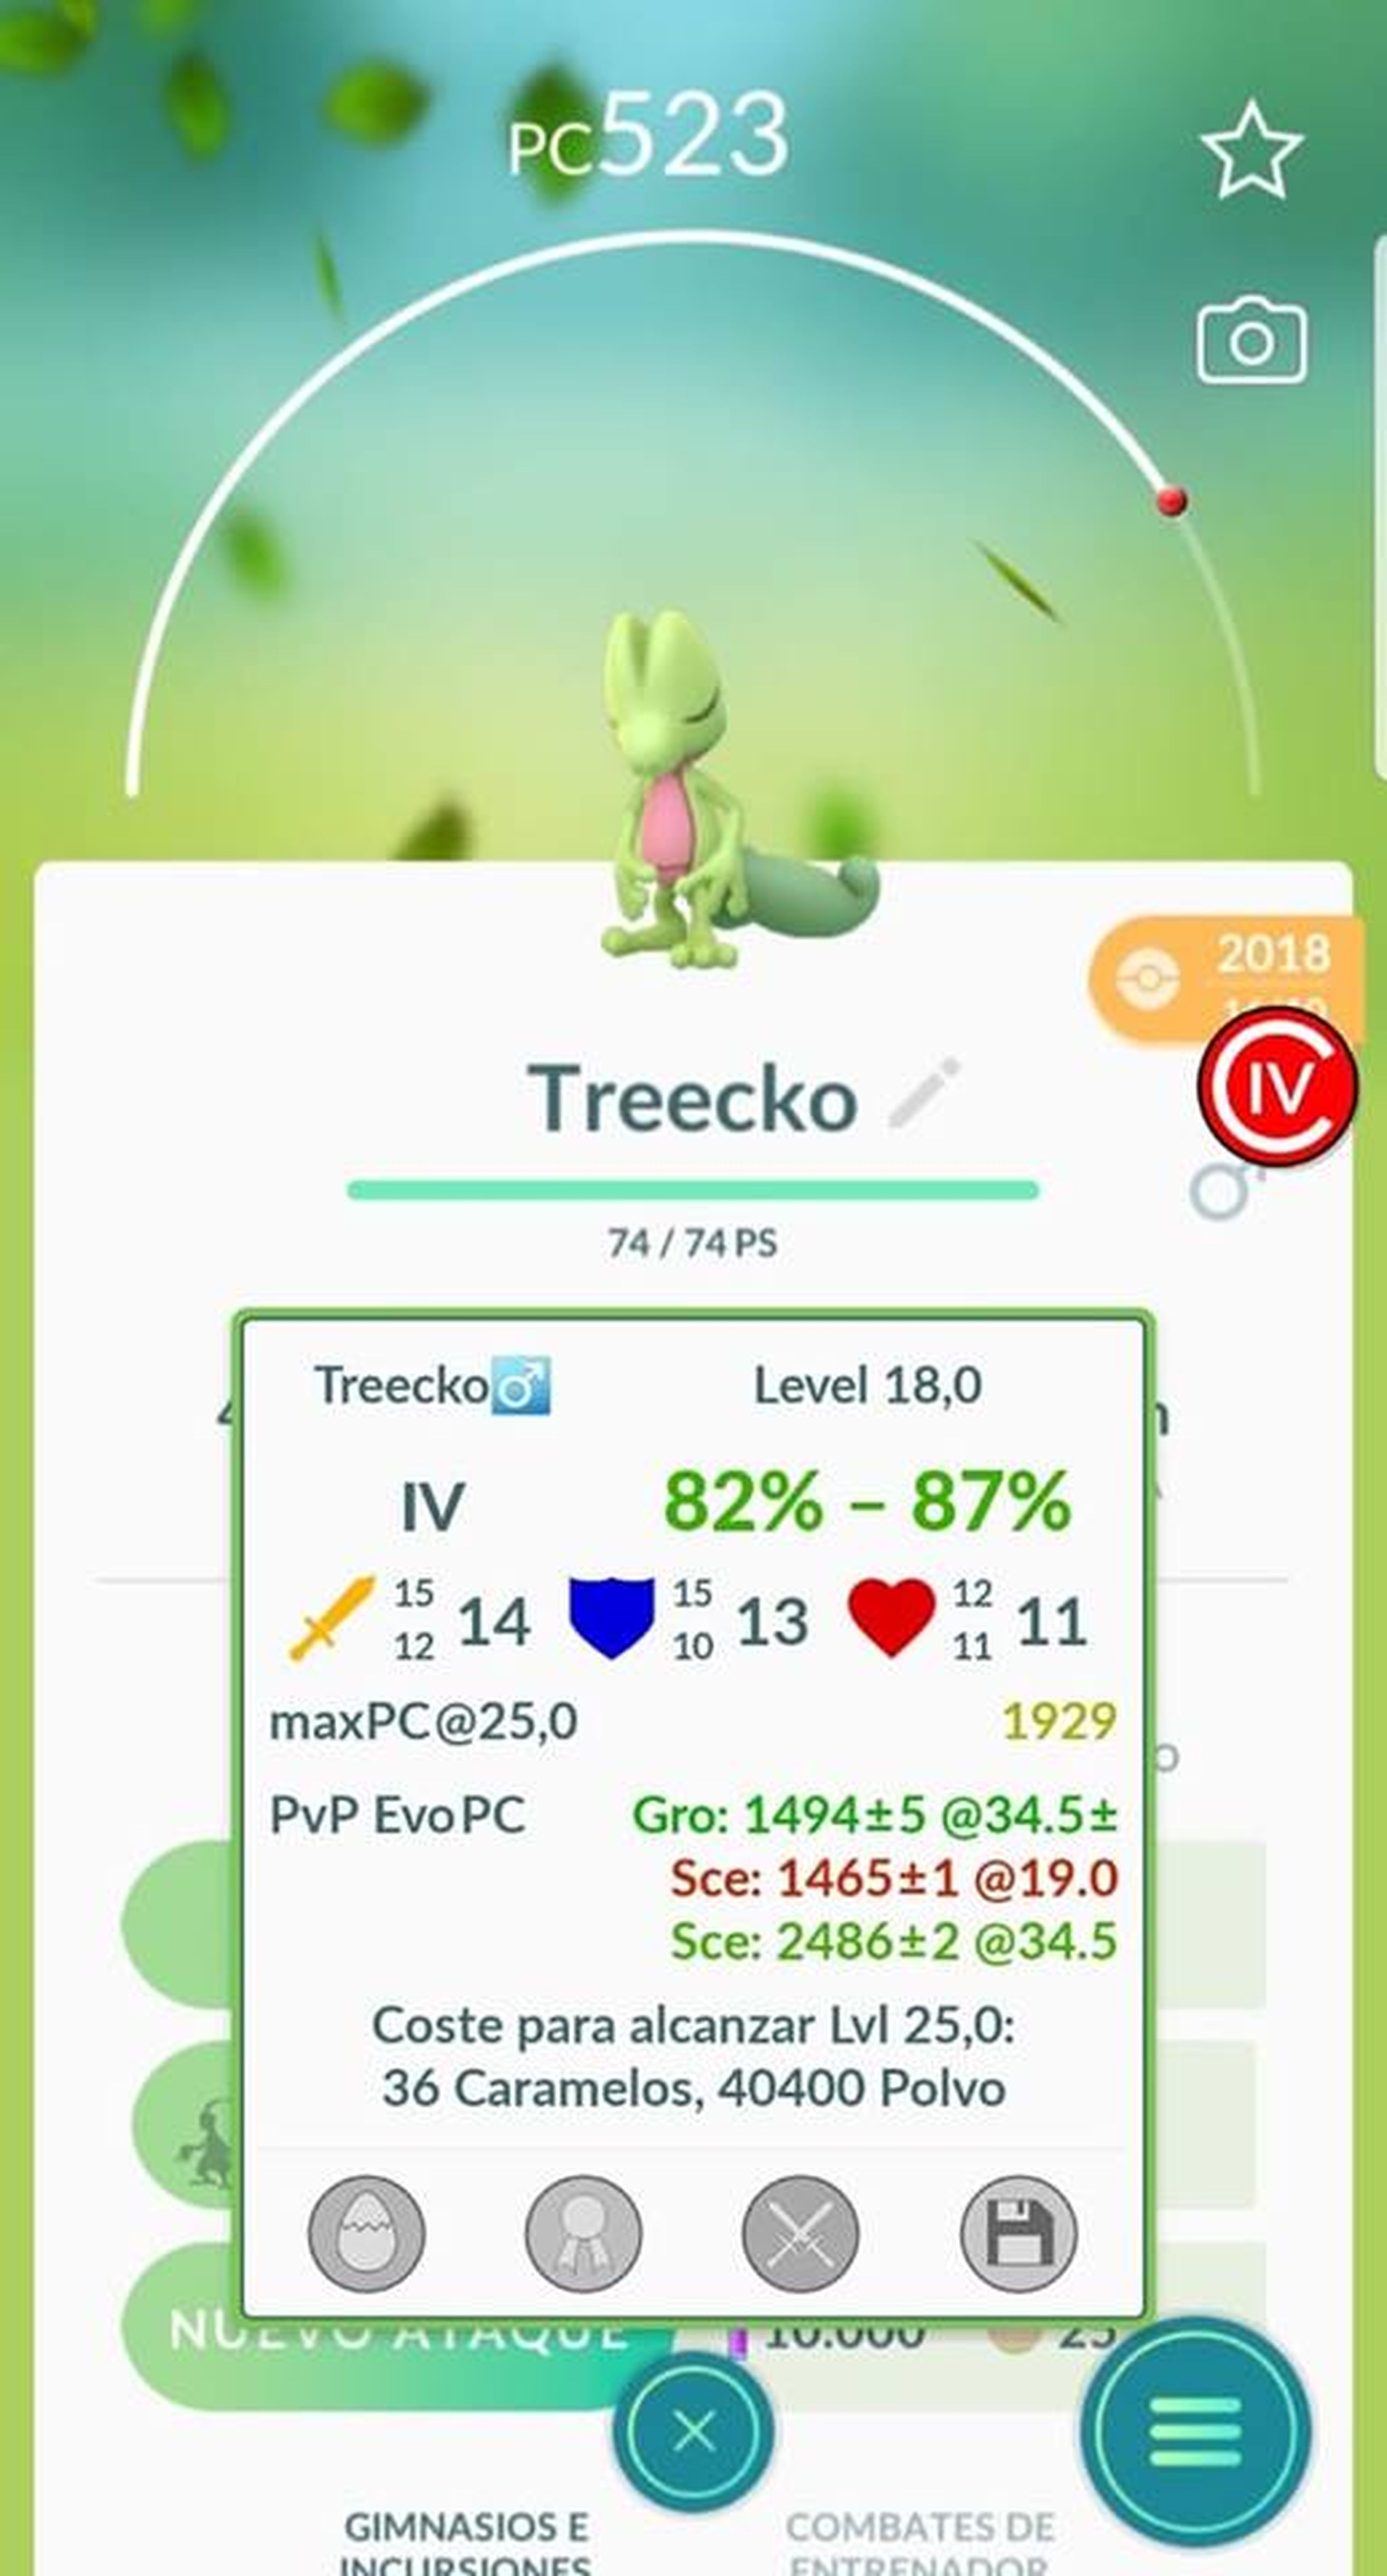 Treecko